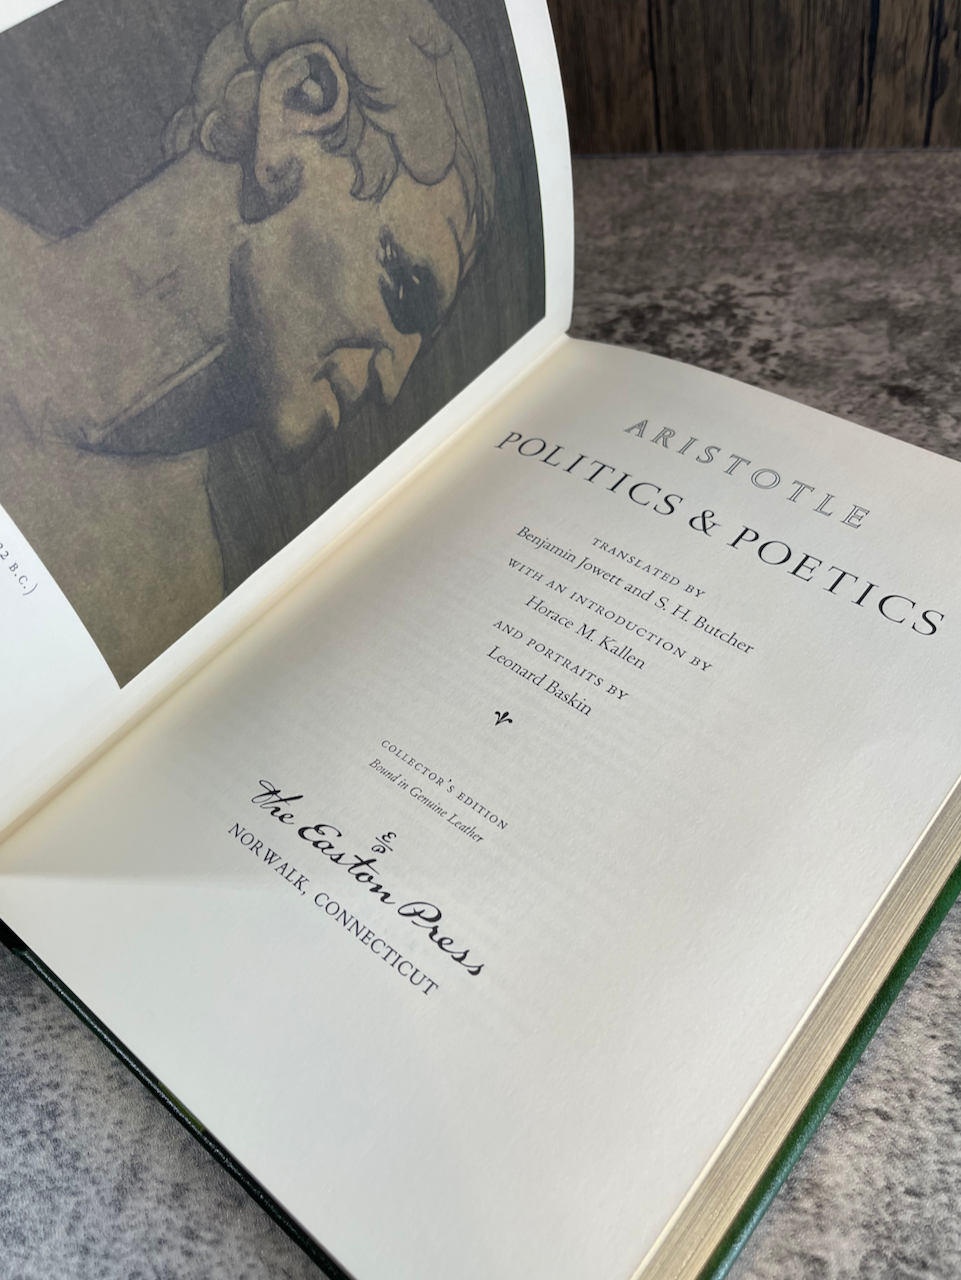 Politics and Poetics / The Easton Press / 100 Greatest Books Ever / 1979 - Precious Cache